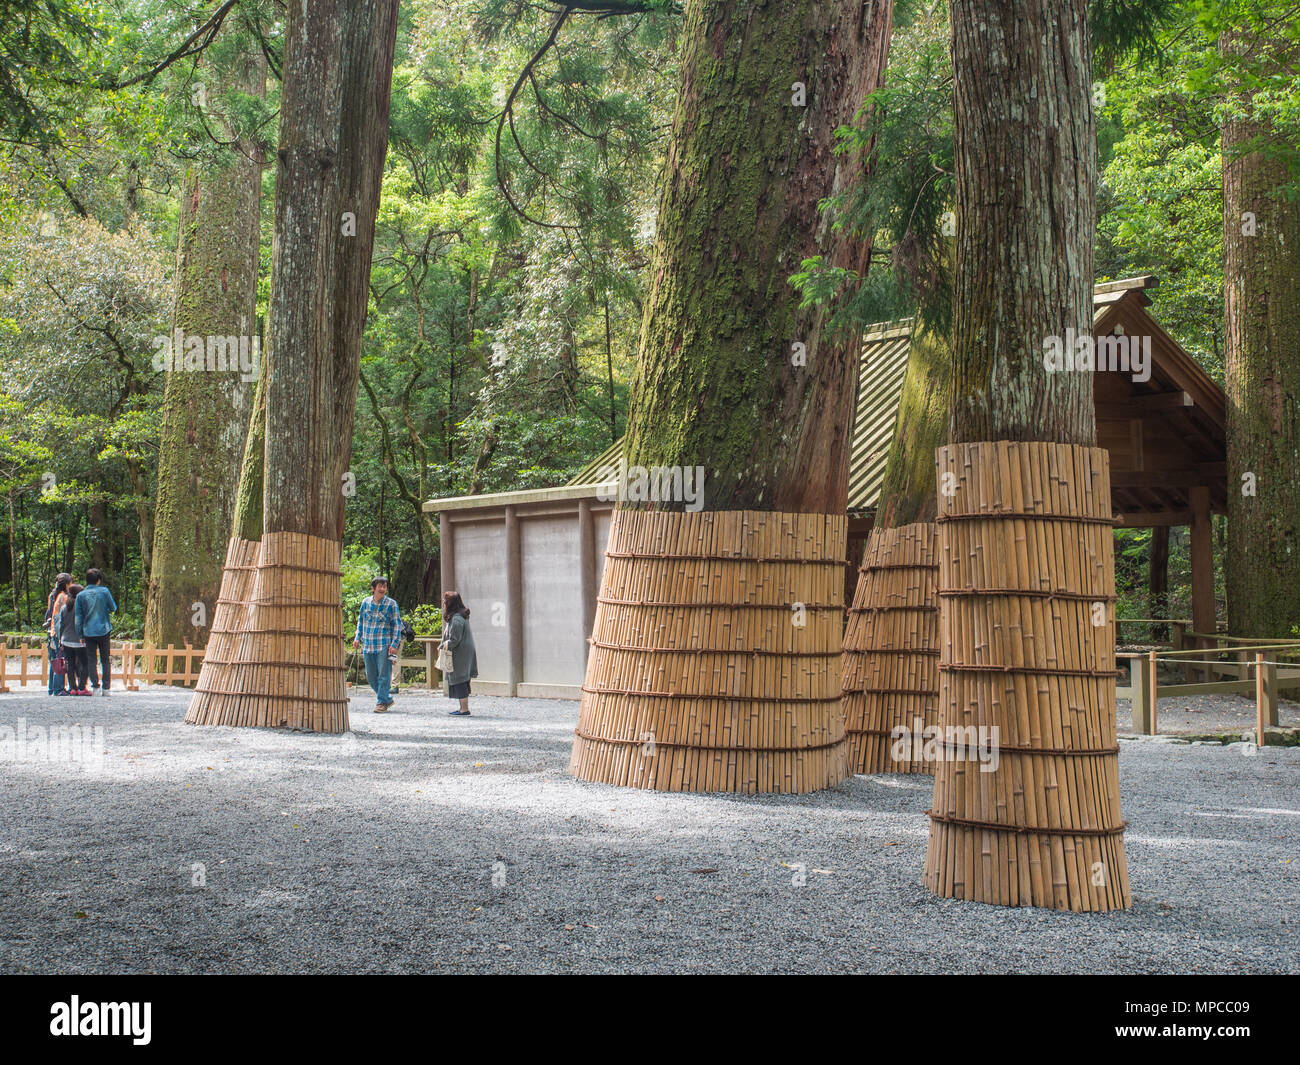 Sacred sugi trees protected  by bamboo skirts, Naiku, Ise Jingu, Mie, Japan Stock Photo